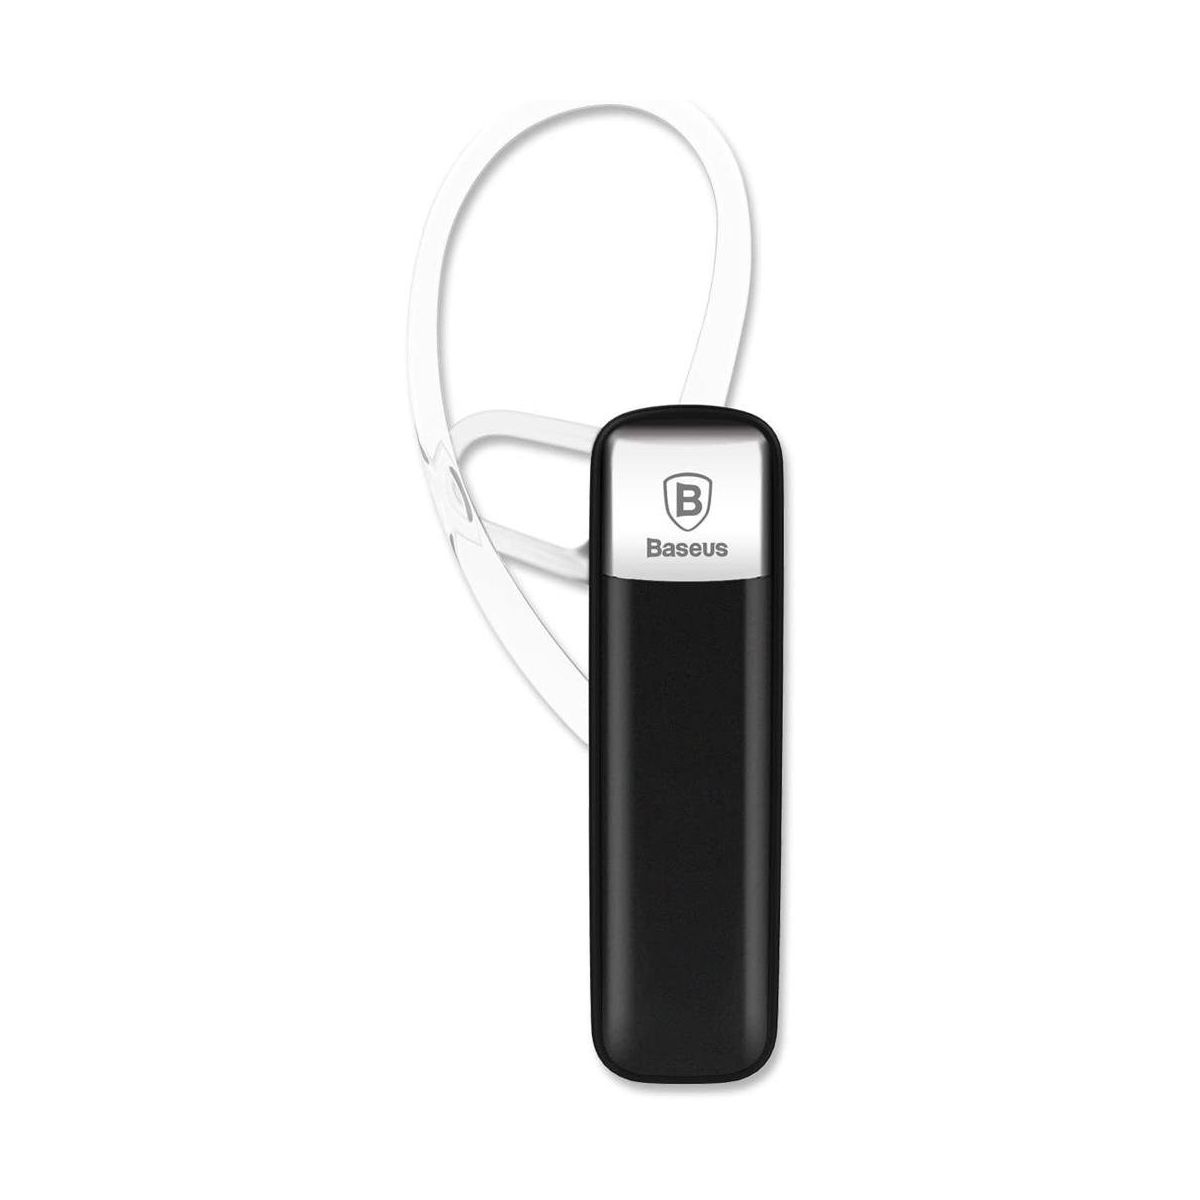 Baseus SIMU S2 ANC True Wireless Bluetooth Kulaklık